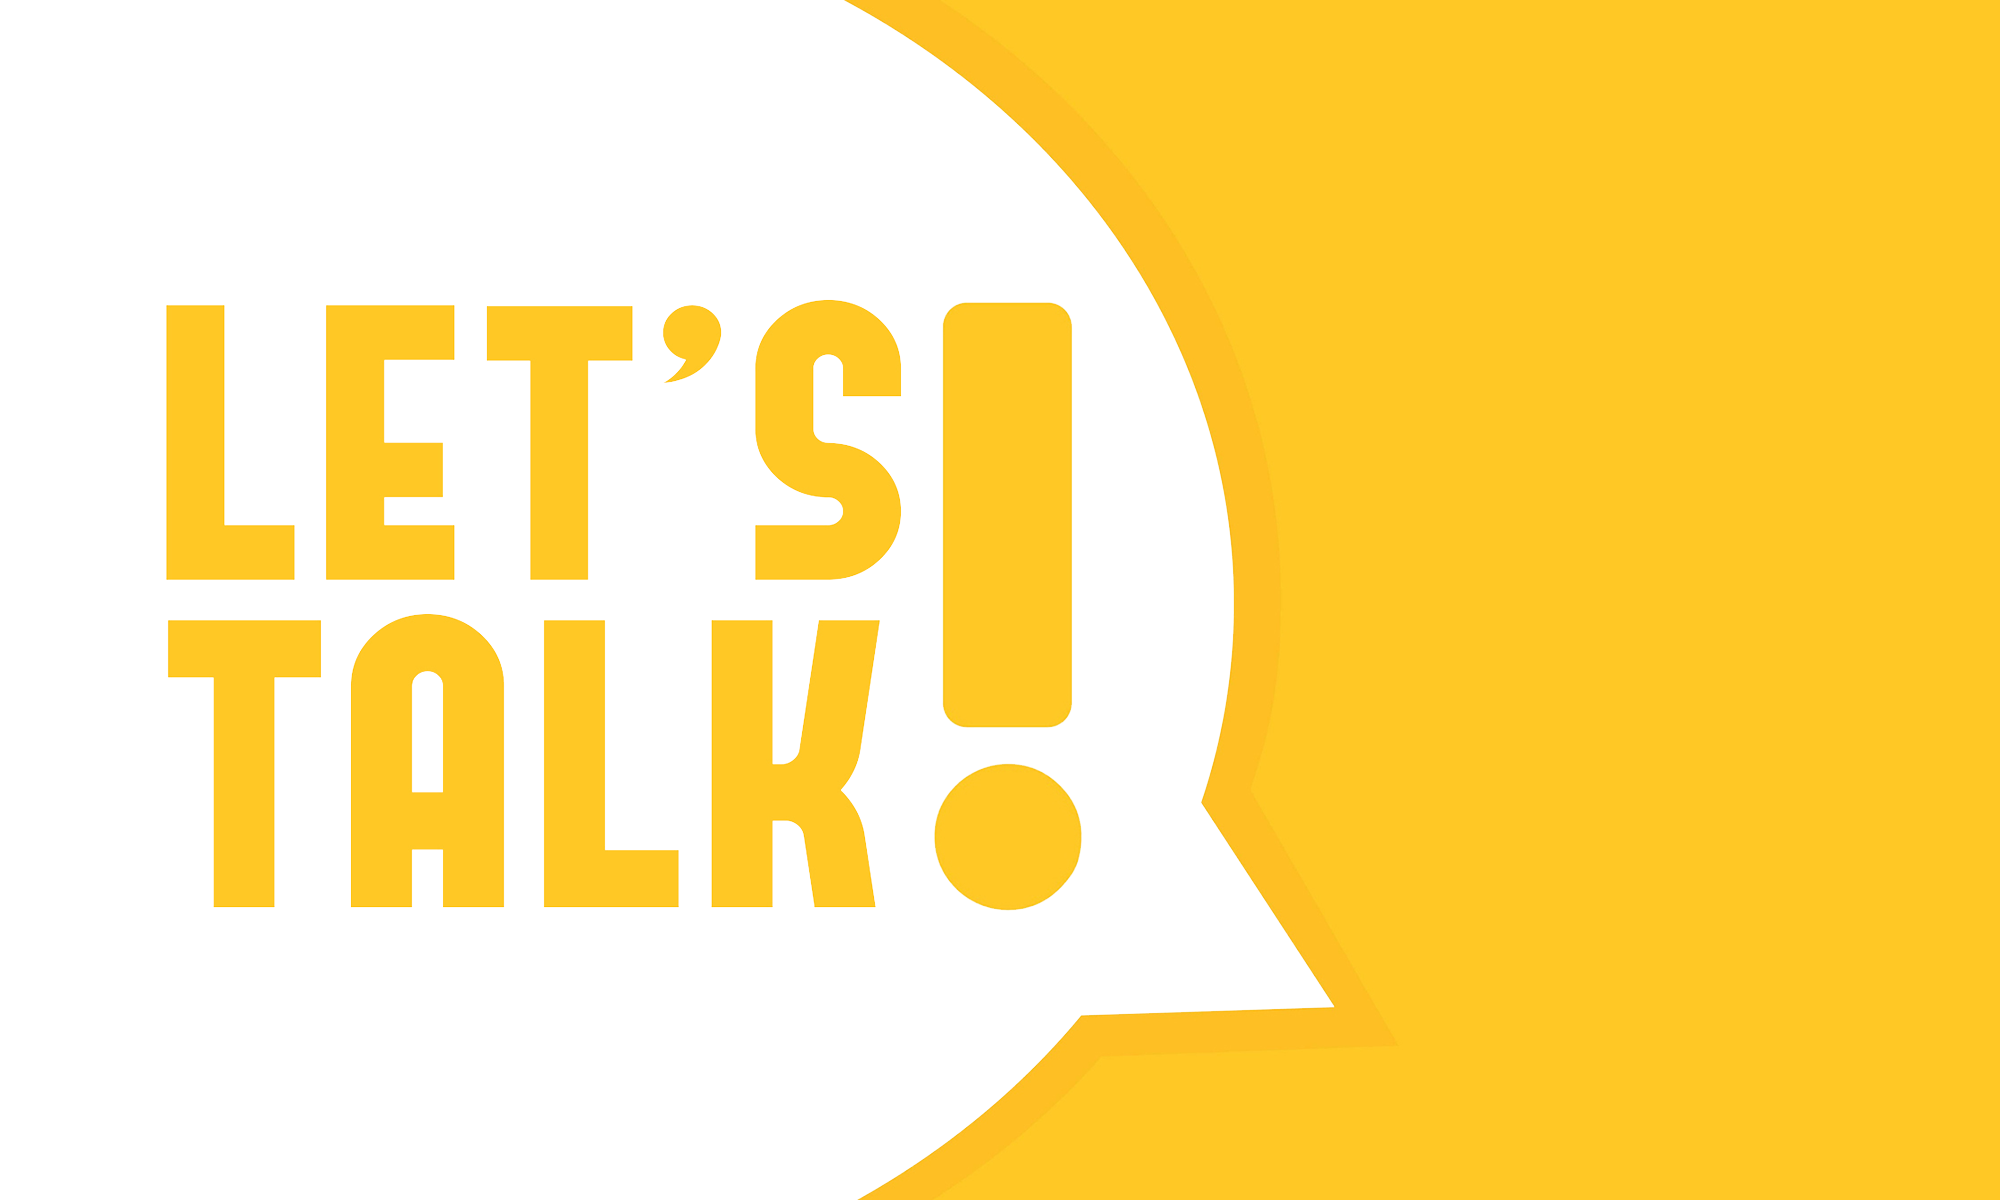 let's talk logo